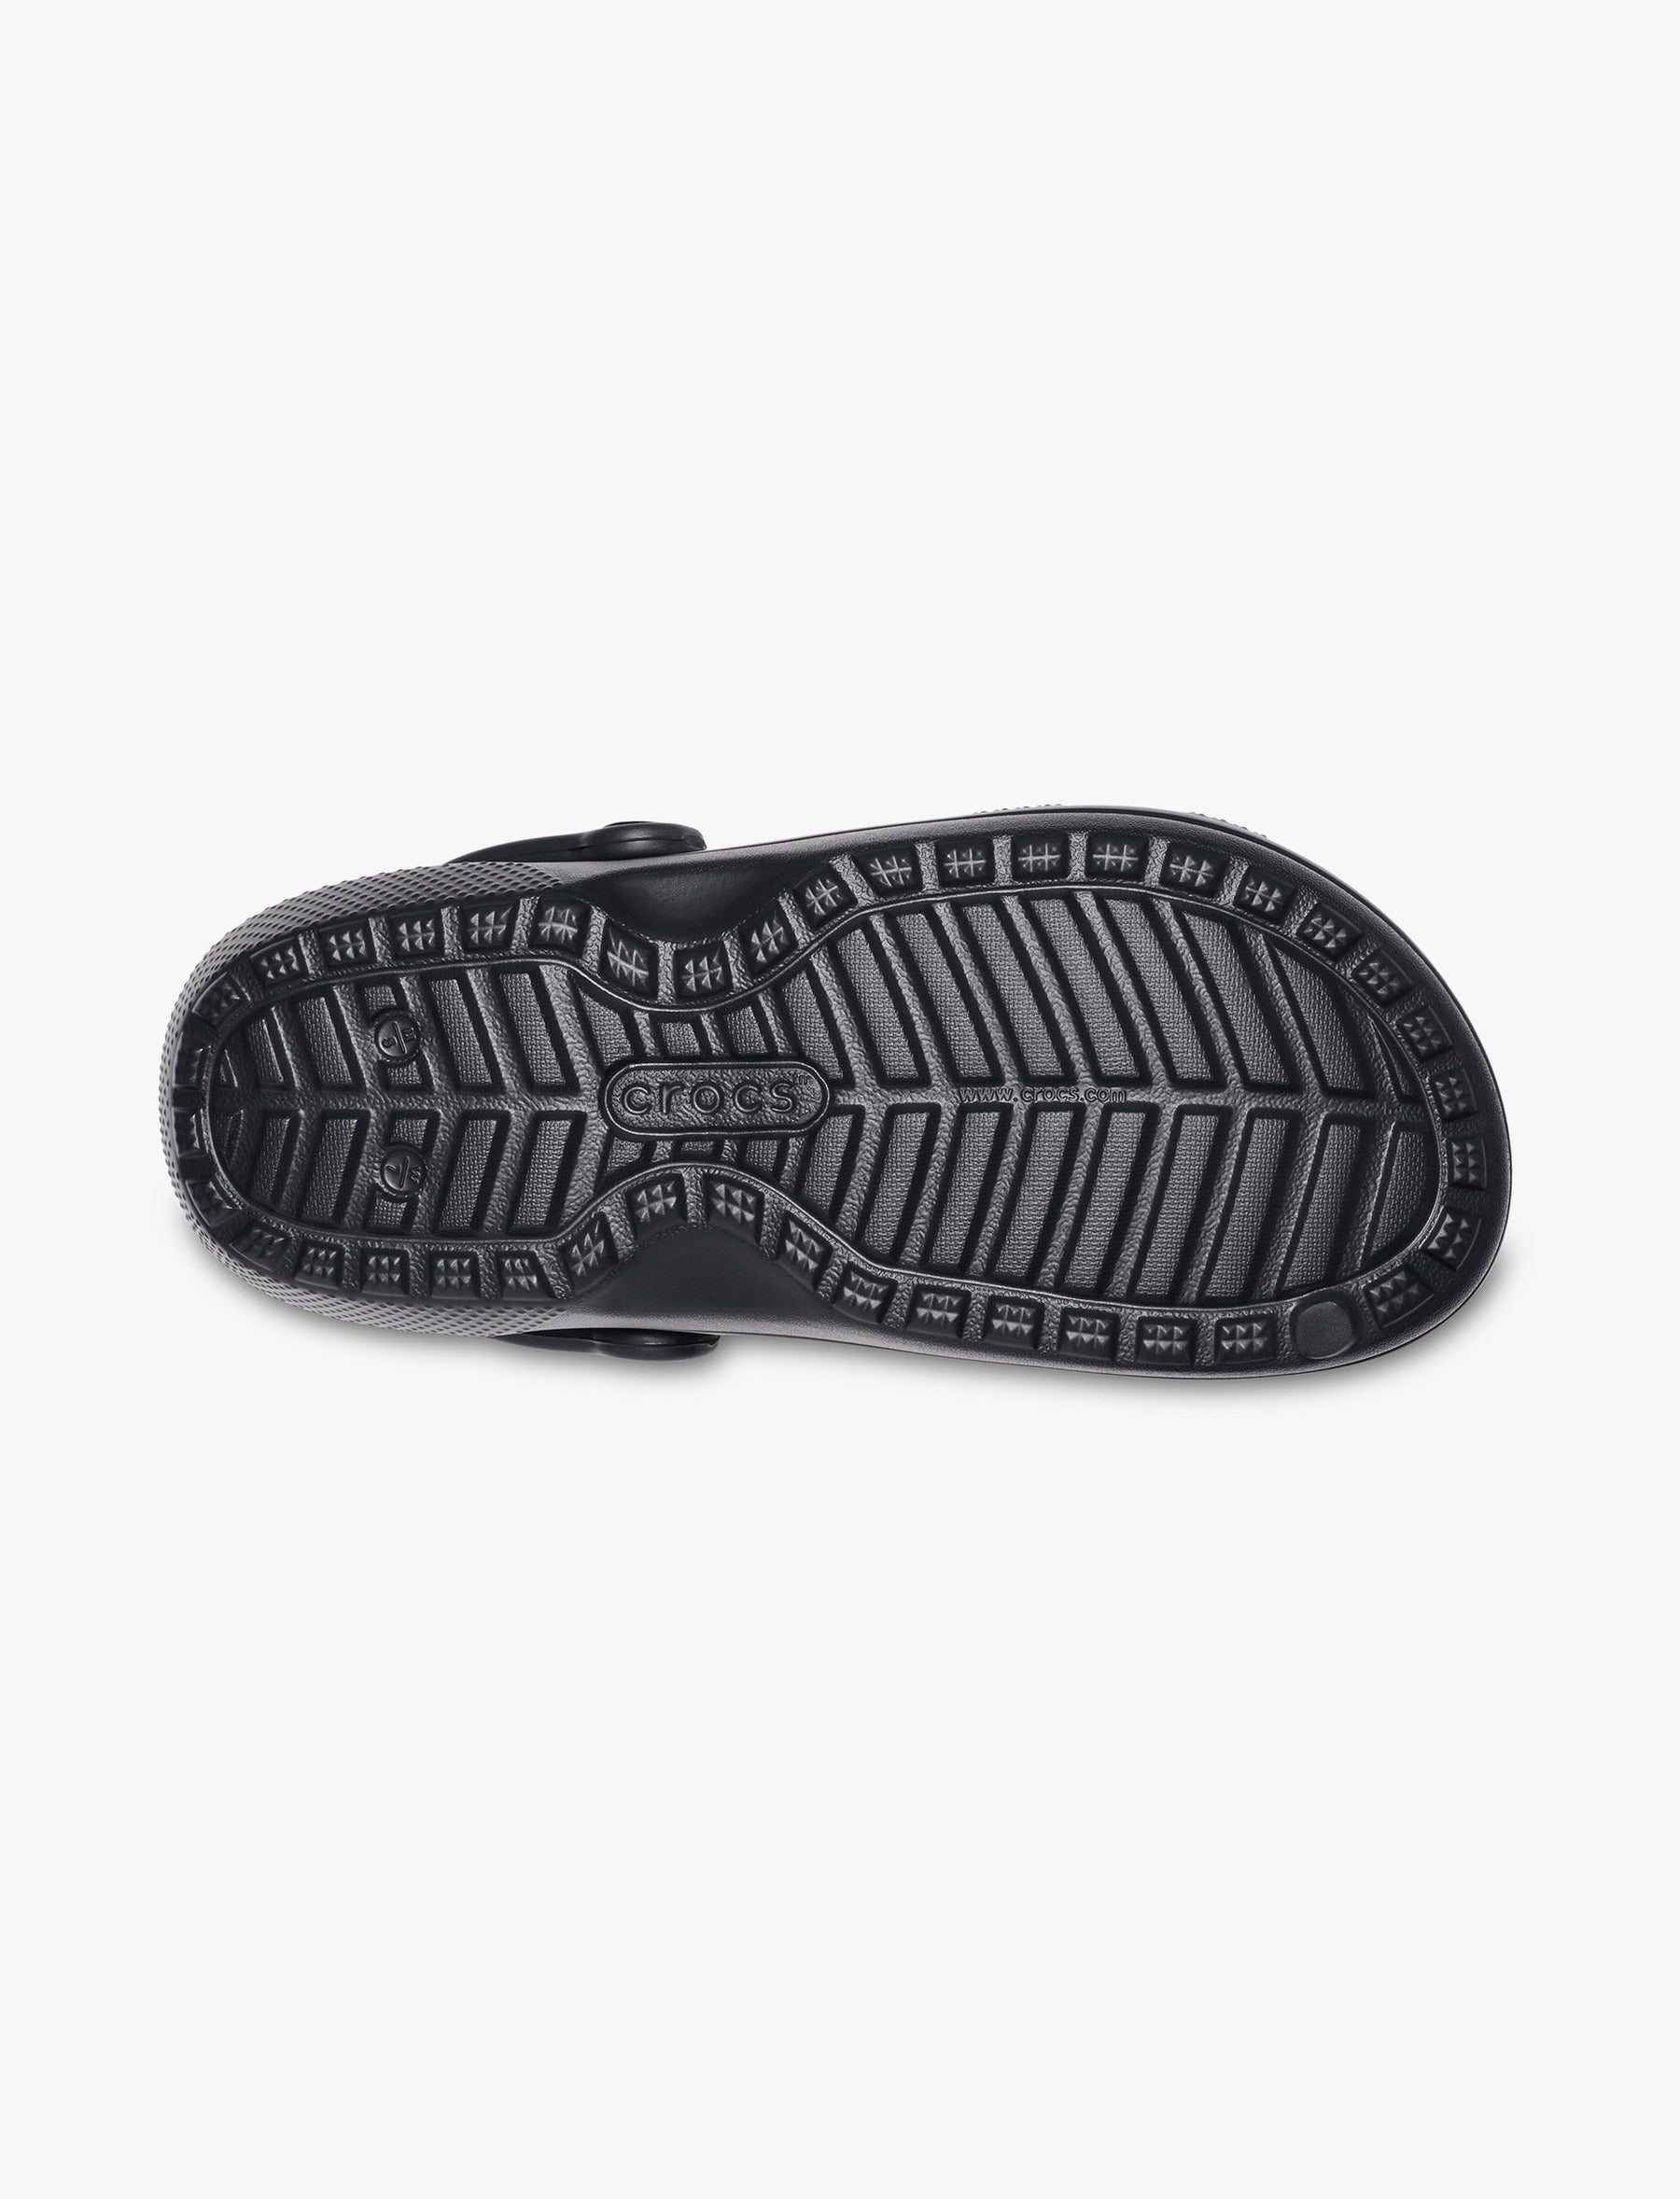 Crocs Classic Lined Clog - כפכפים פרוותיים קרוקס בצבע שחור/שחור-Crocs-37-38-נאקו